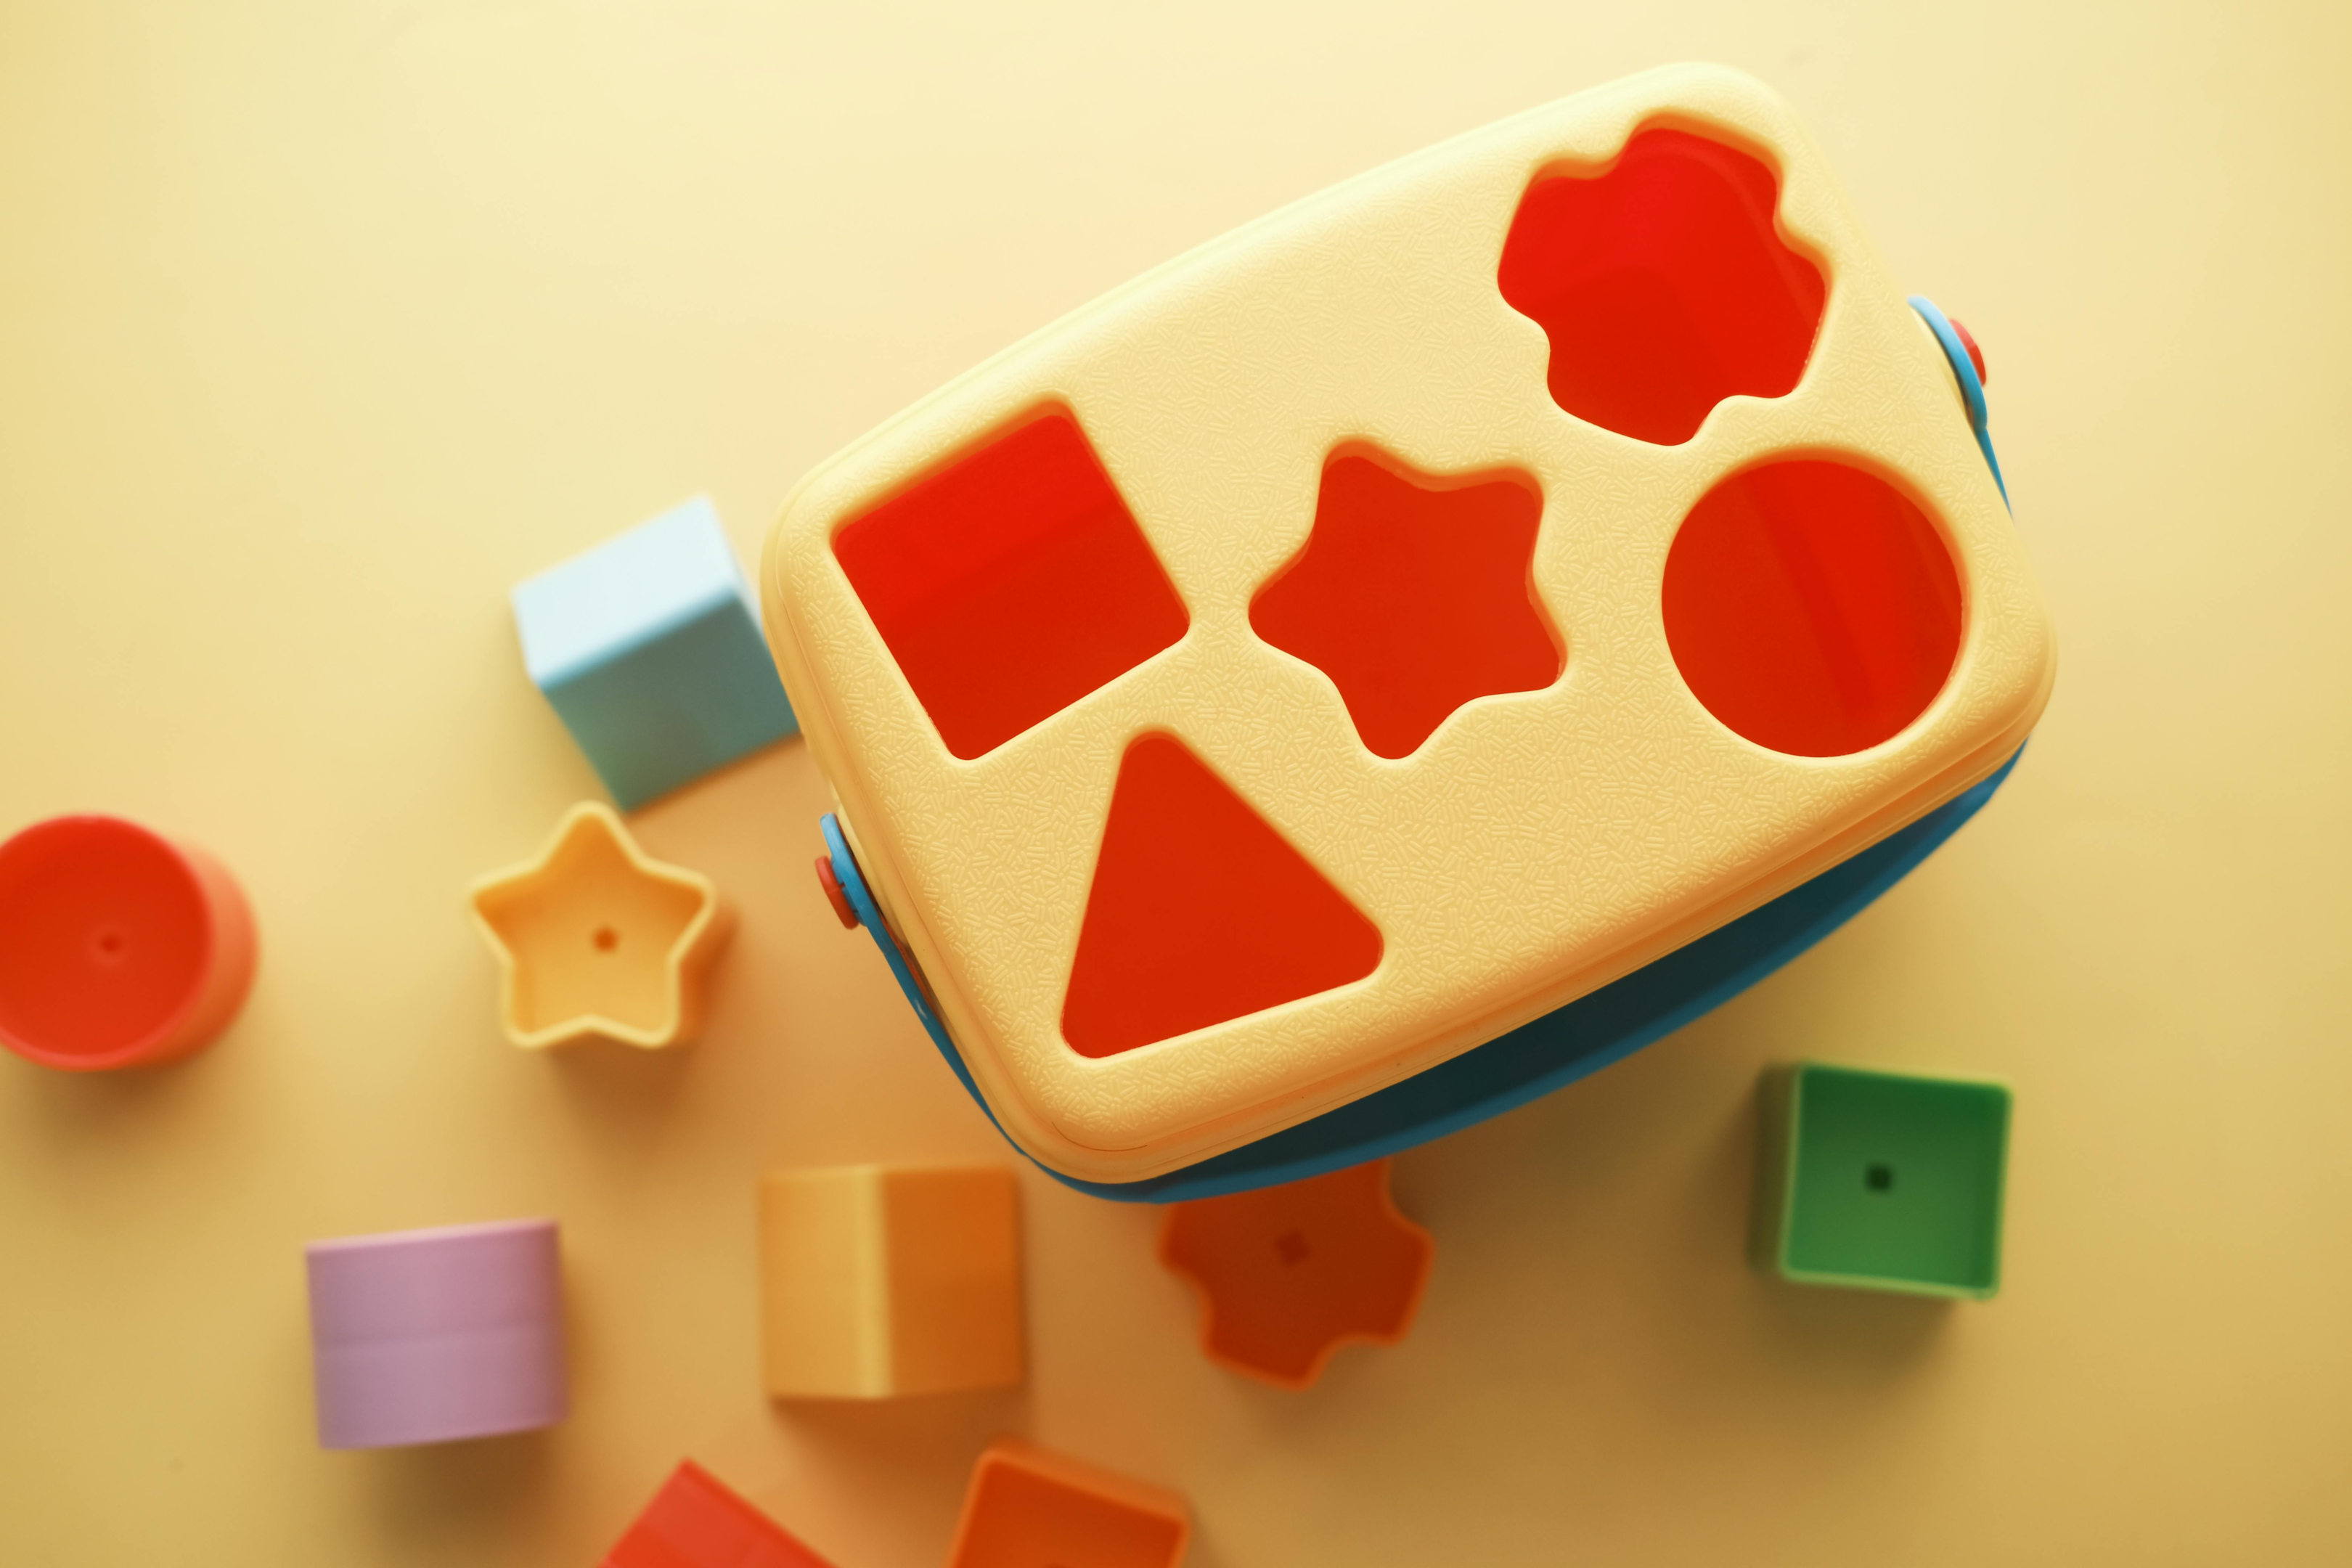 shape sorter toy for shape recognition